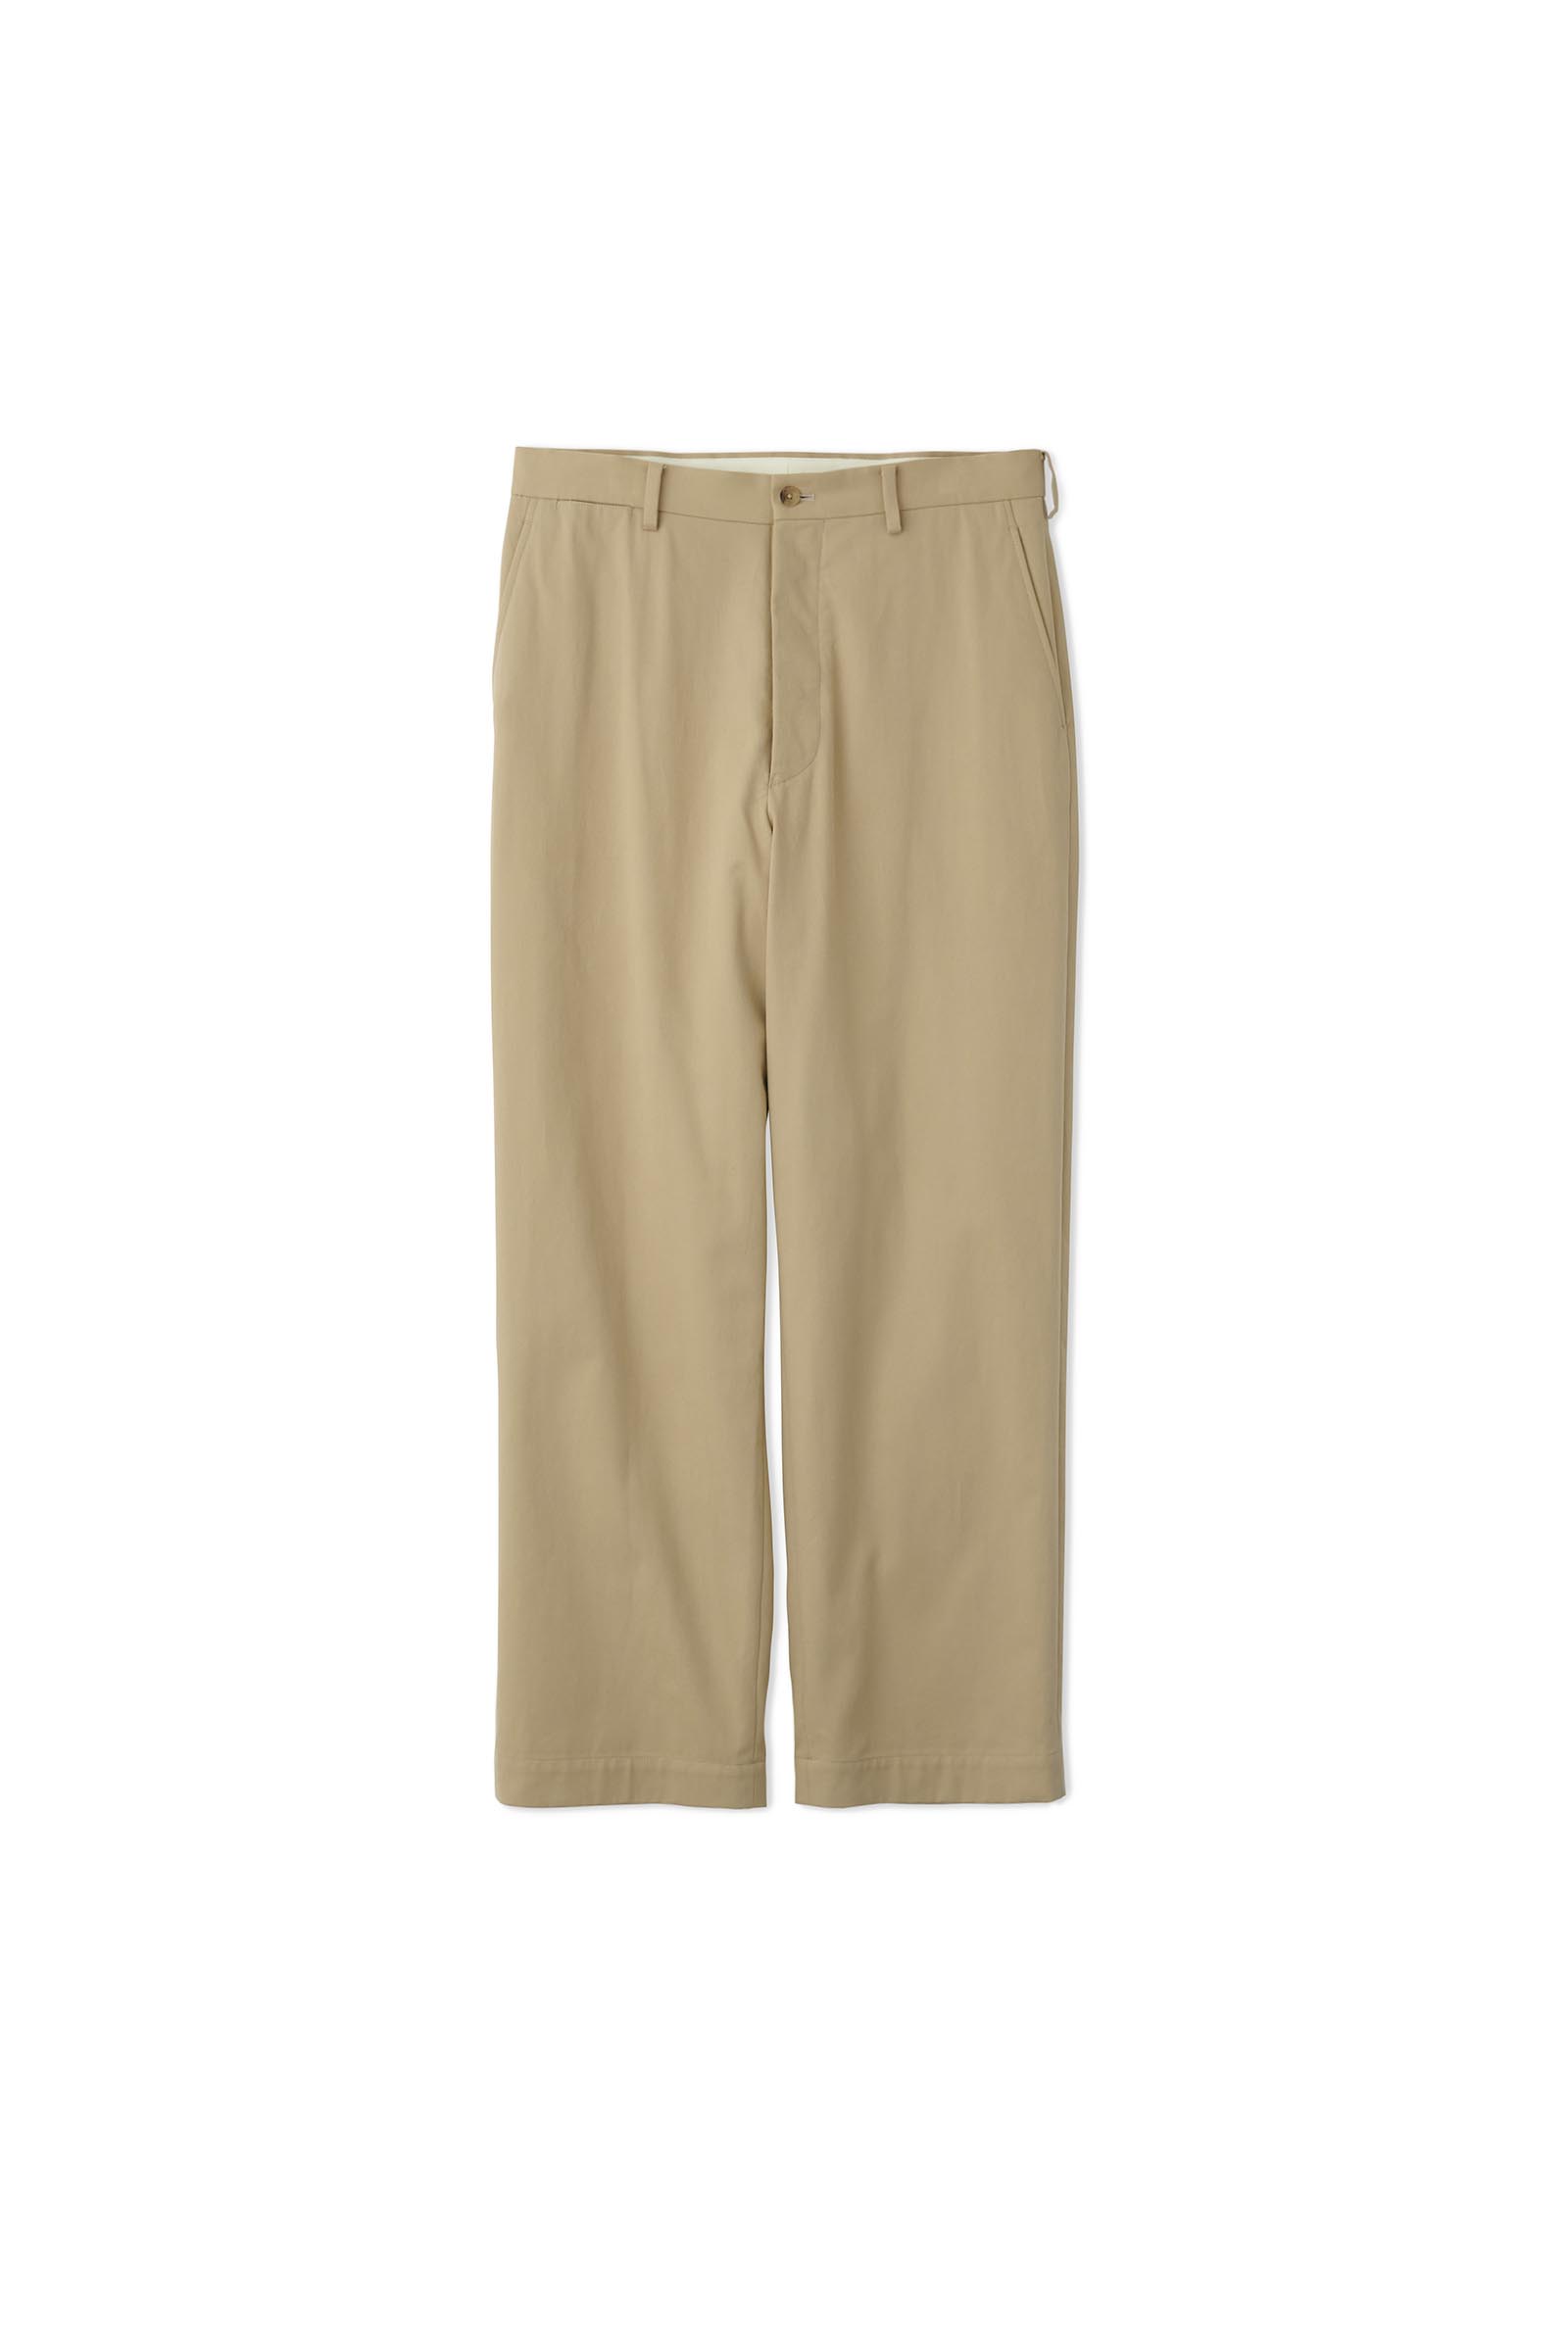 HERILL / Egyptian cotton Chino pants